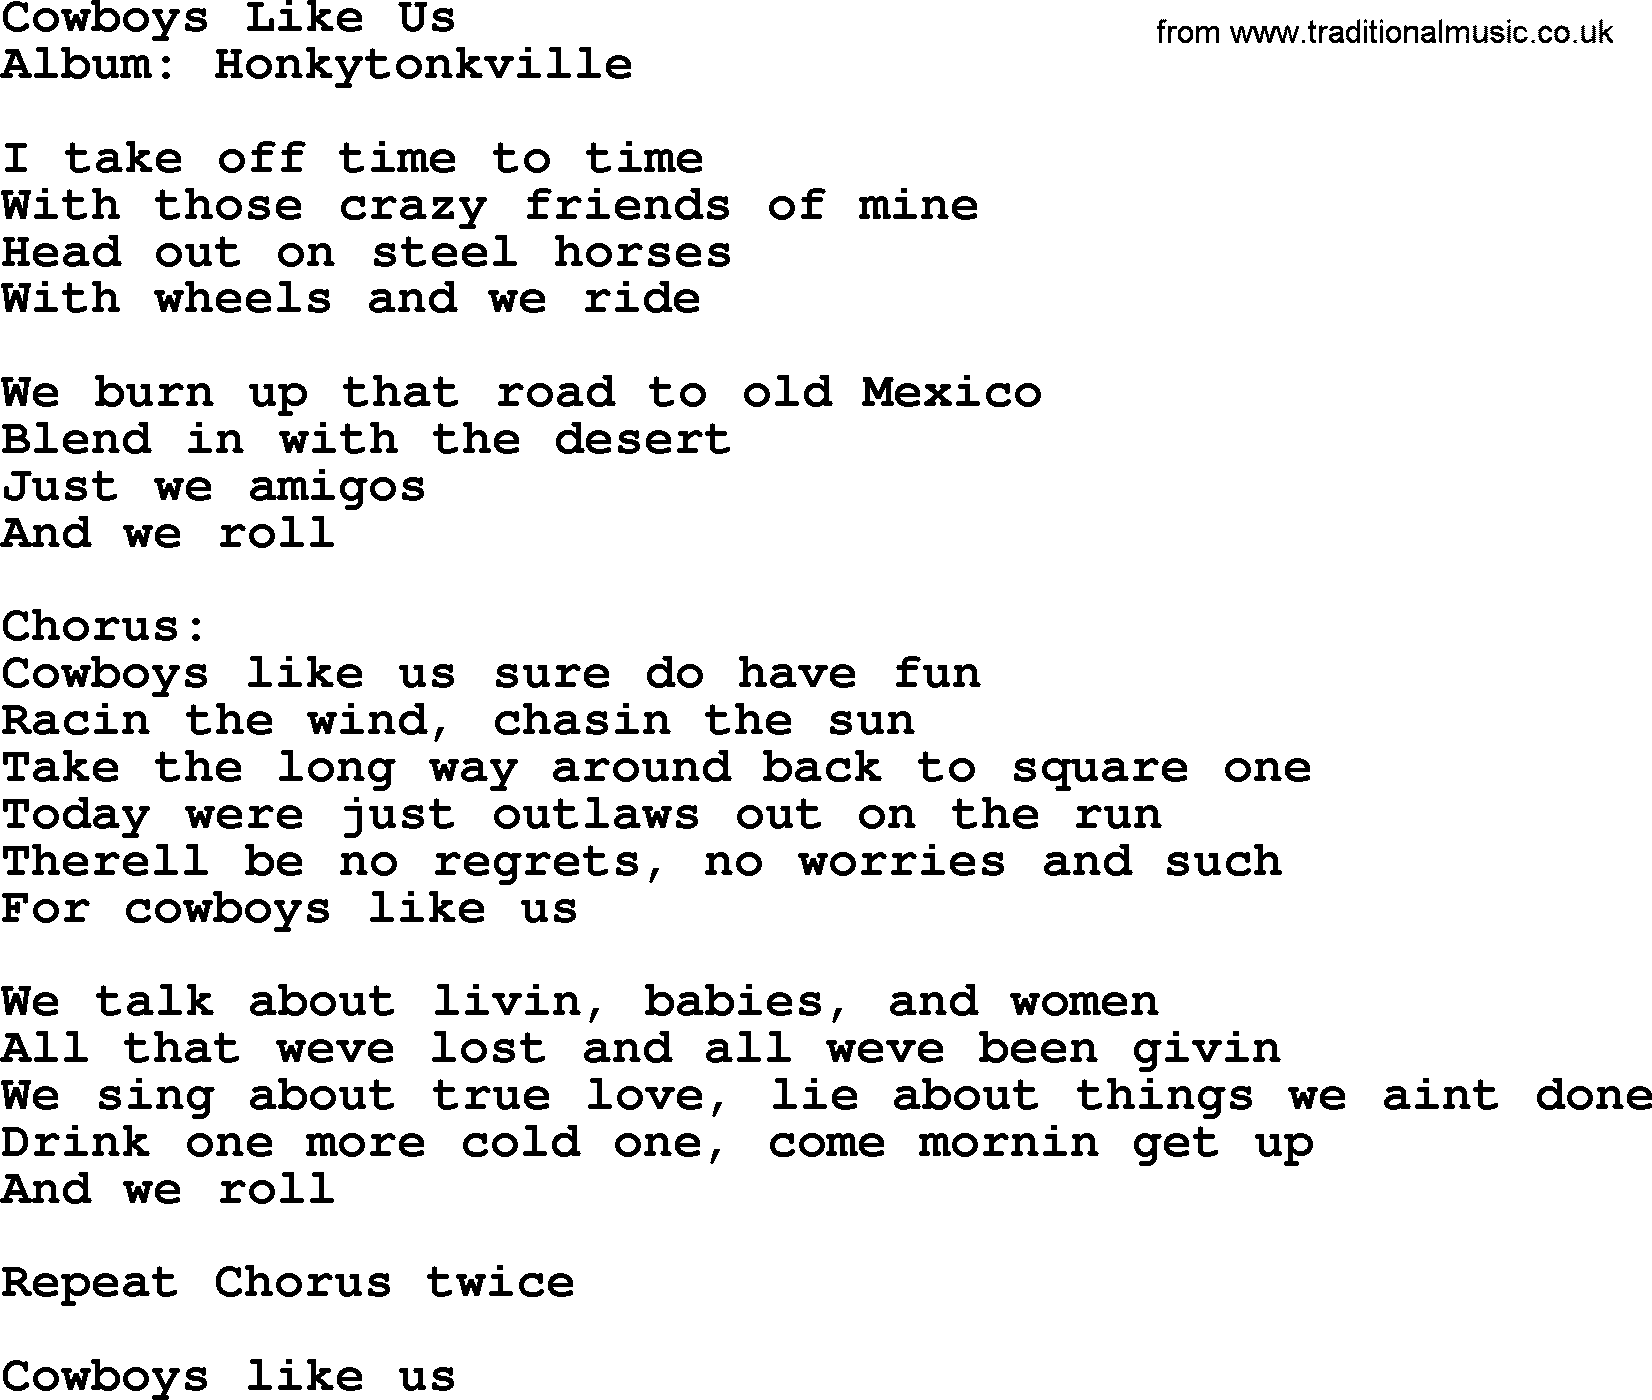 George Strait song: Cowboys Like Us, lyrics